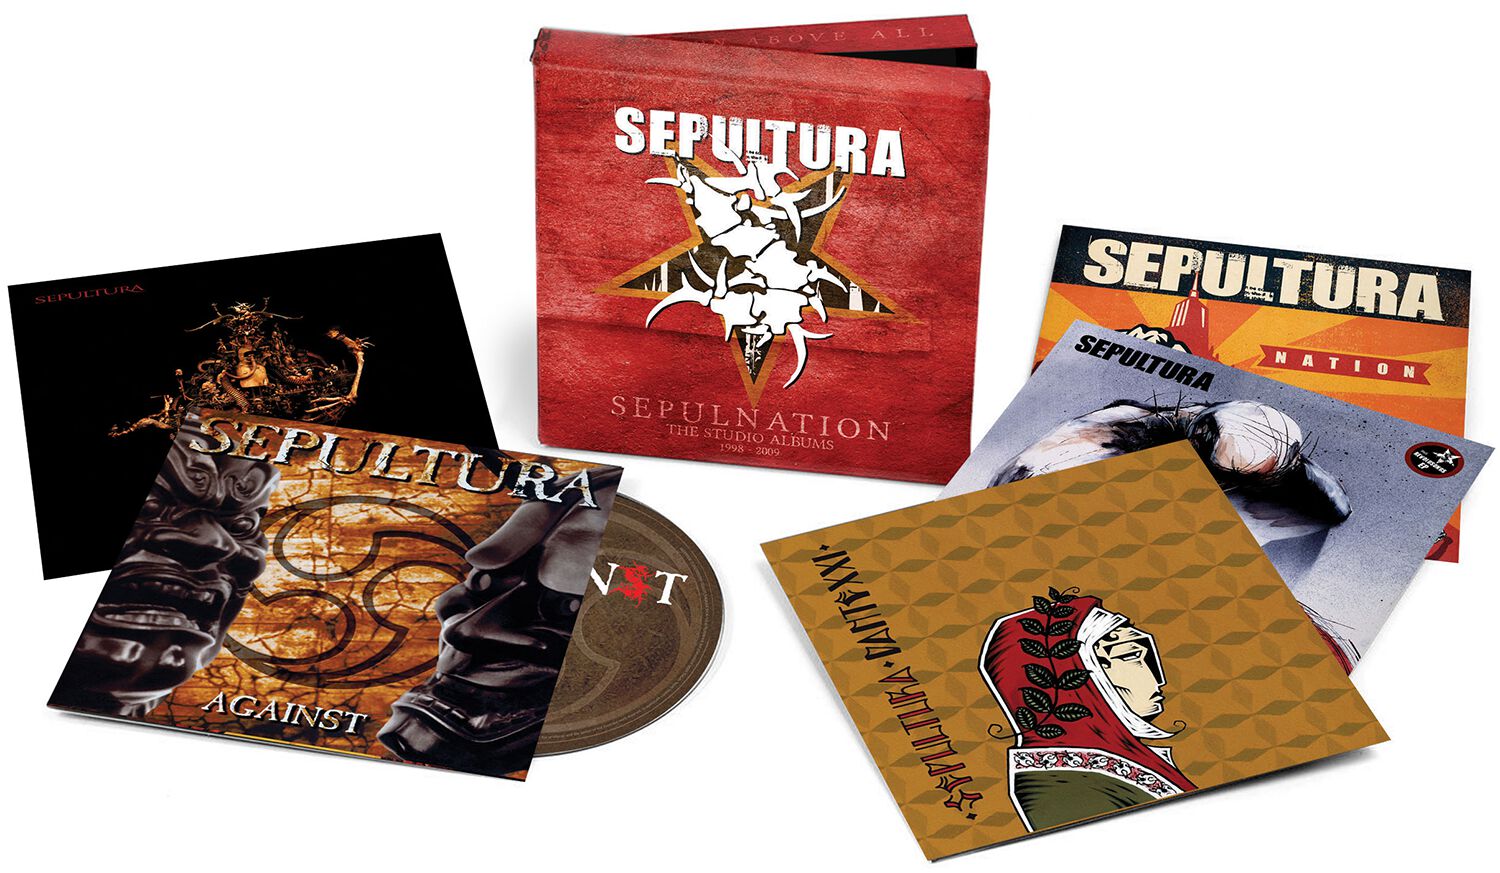 Sepultura Sepulnation - The Studio Albums 1998-2009 CD multicolor